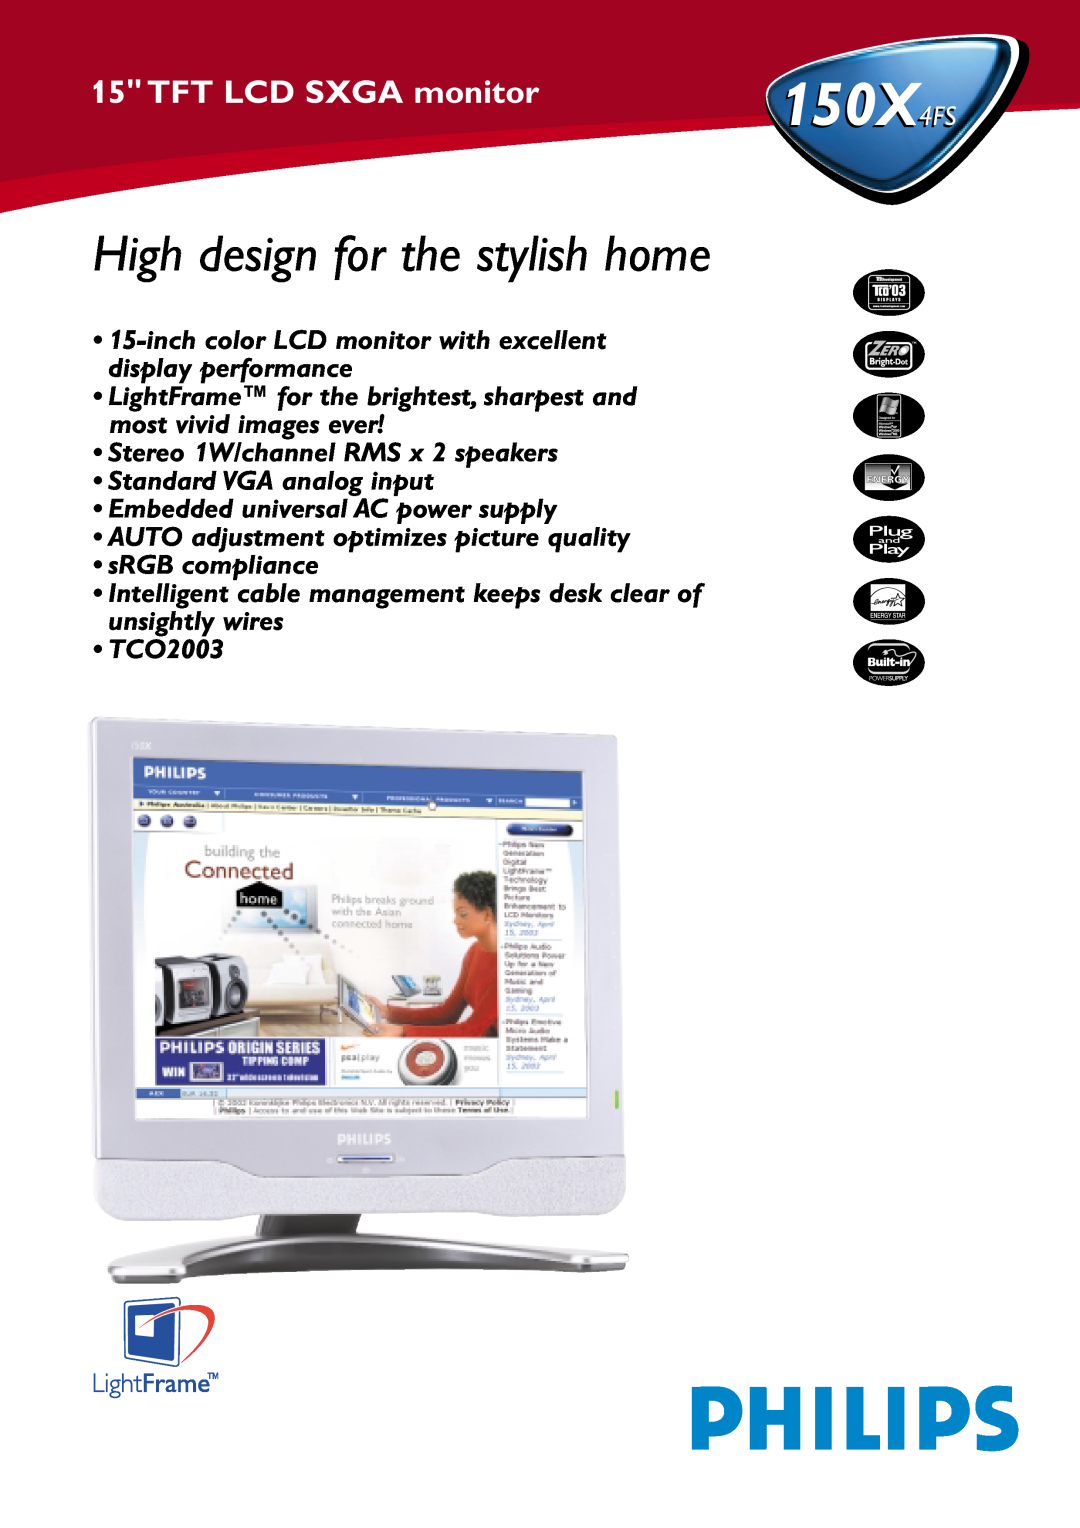 Philips 150X4FS manual High design for the stylish home, TFT LCD SXGA monitor 